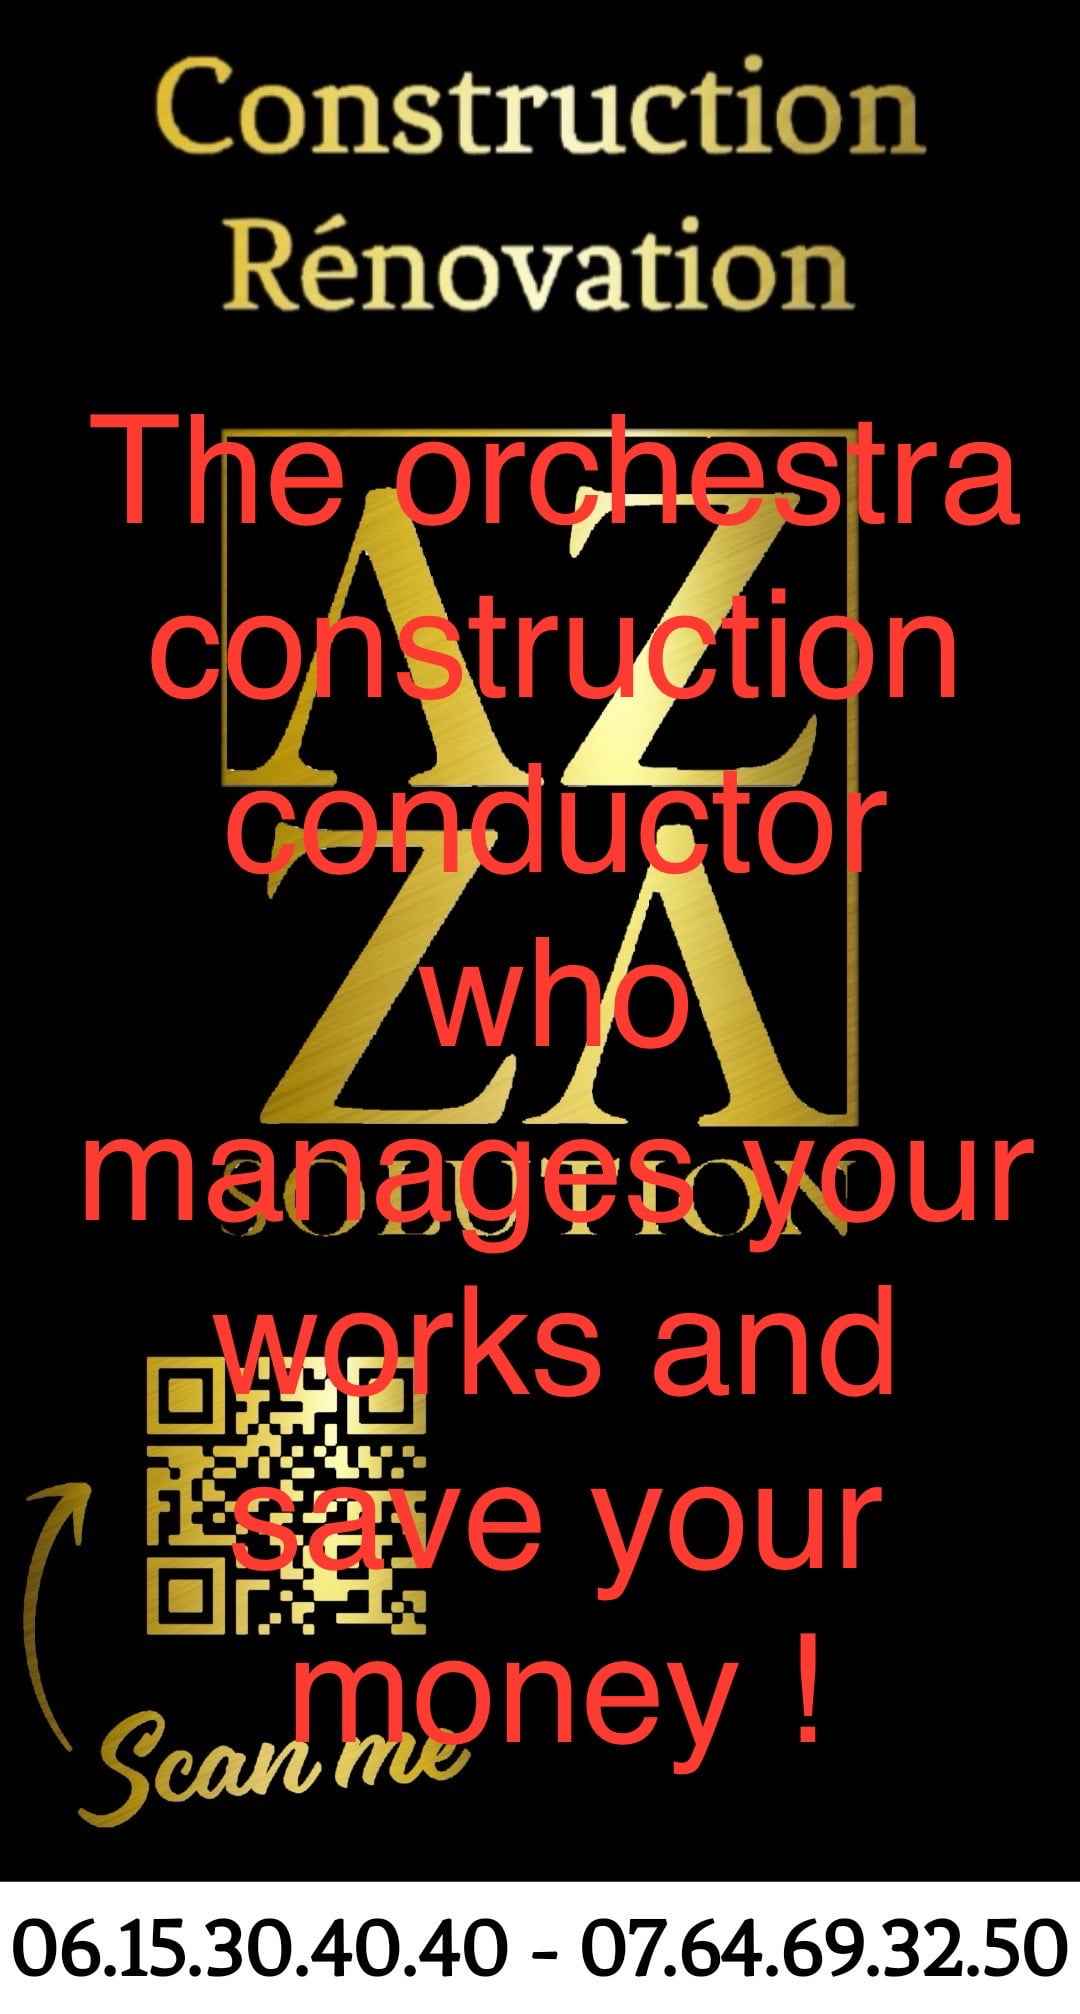 Lire la suite à propos de l’article AZZA Solution, the orchestra construction conductor who manages your works and save your money !